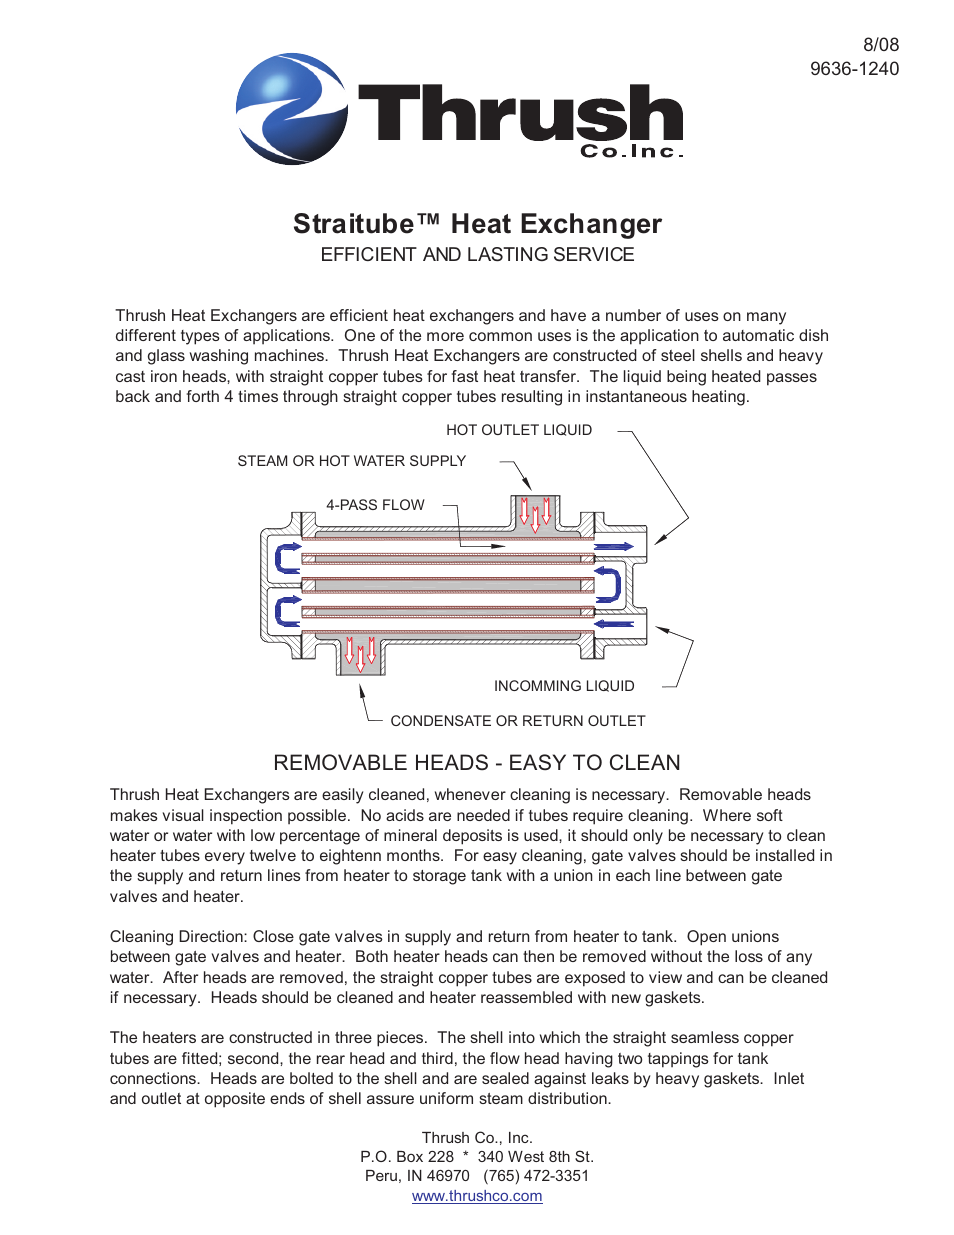 Stainless Steel Straitube Heat Exchangers